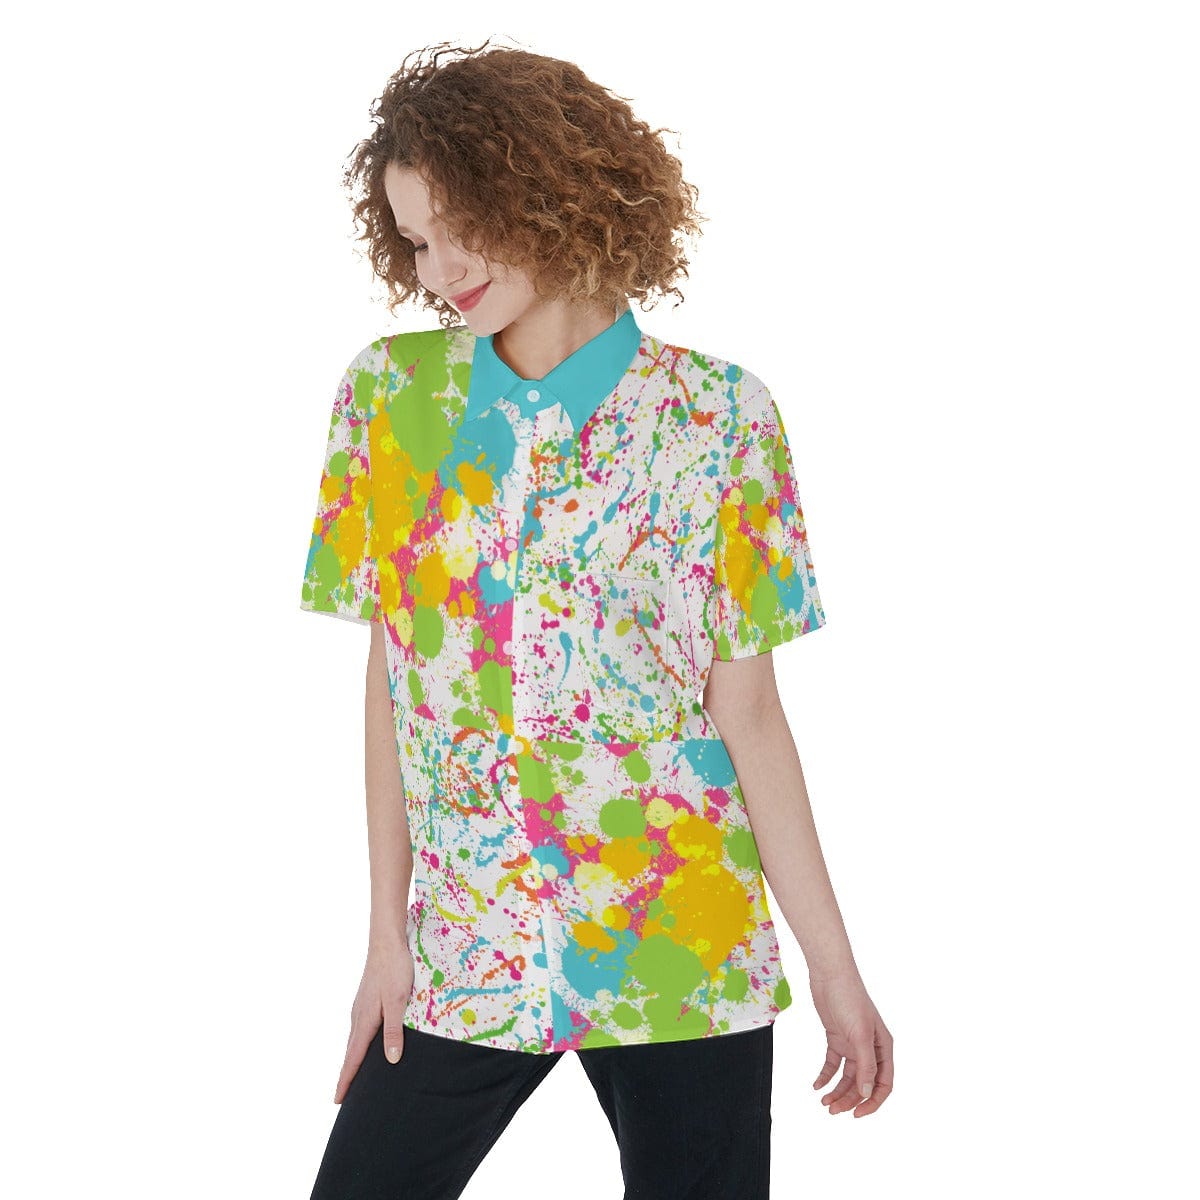 Yoycol Skirt Set 2XL / Paint Splatter Paint Splatter - Women's Short Sleeve Shirt With Pocket